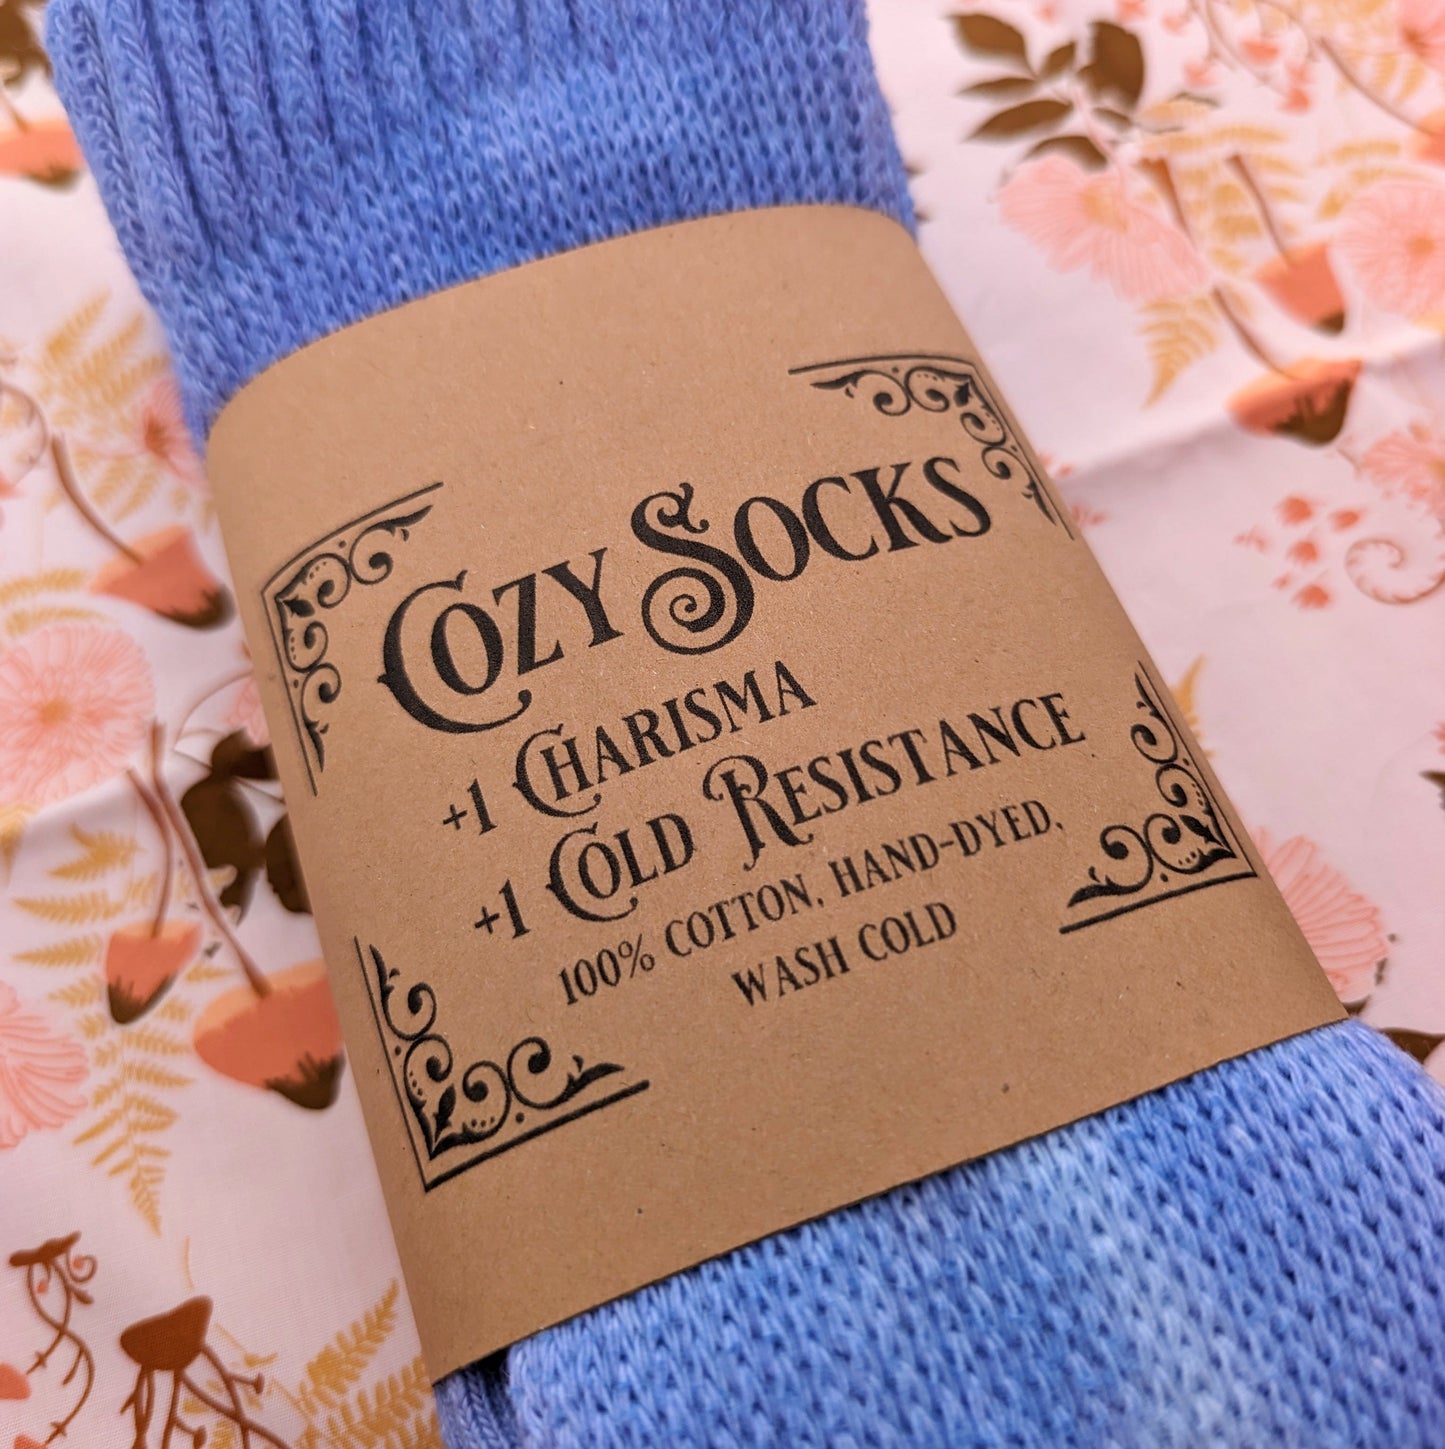 Cozy Socks - Medium Purple Hydrangea